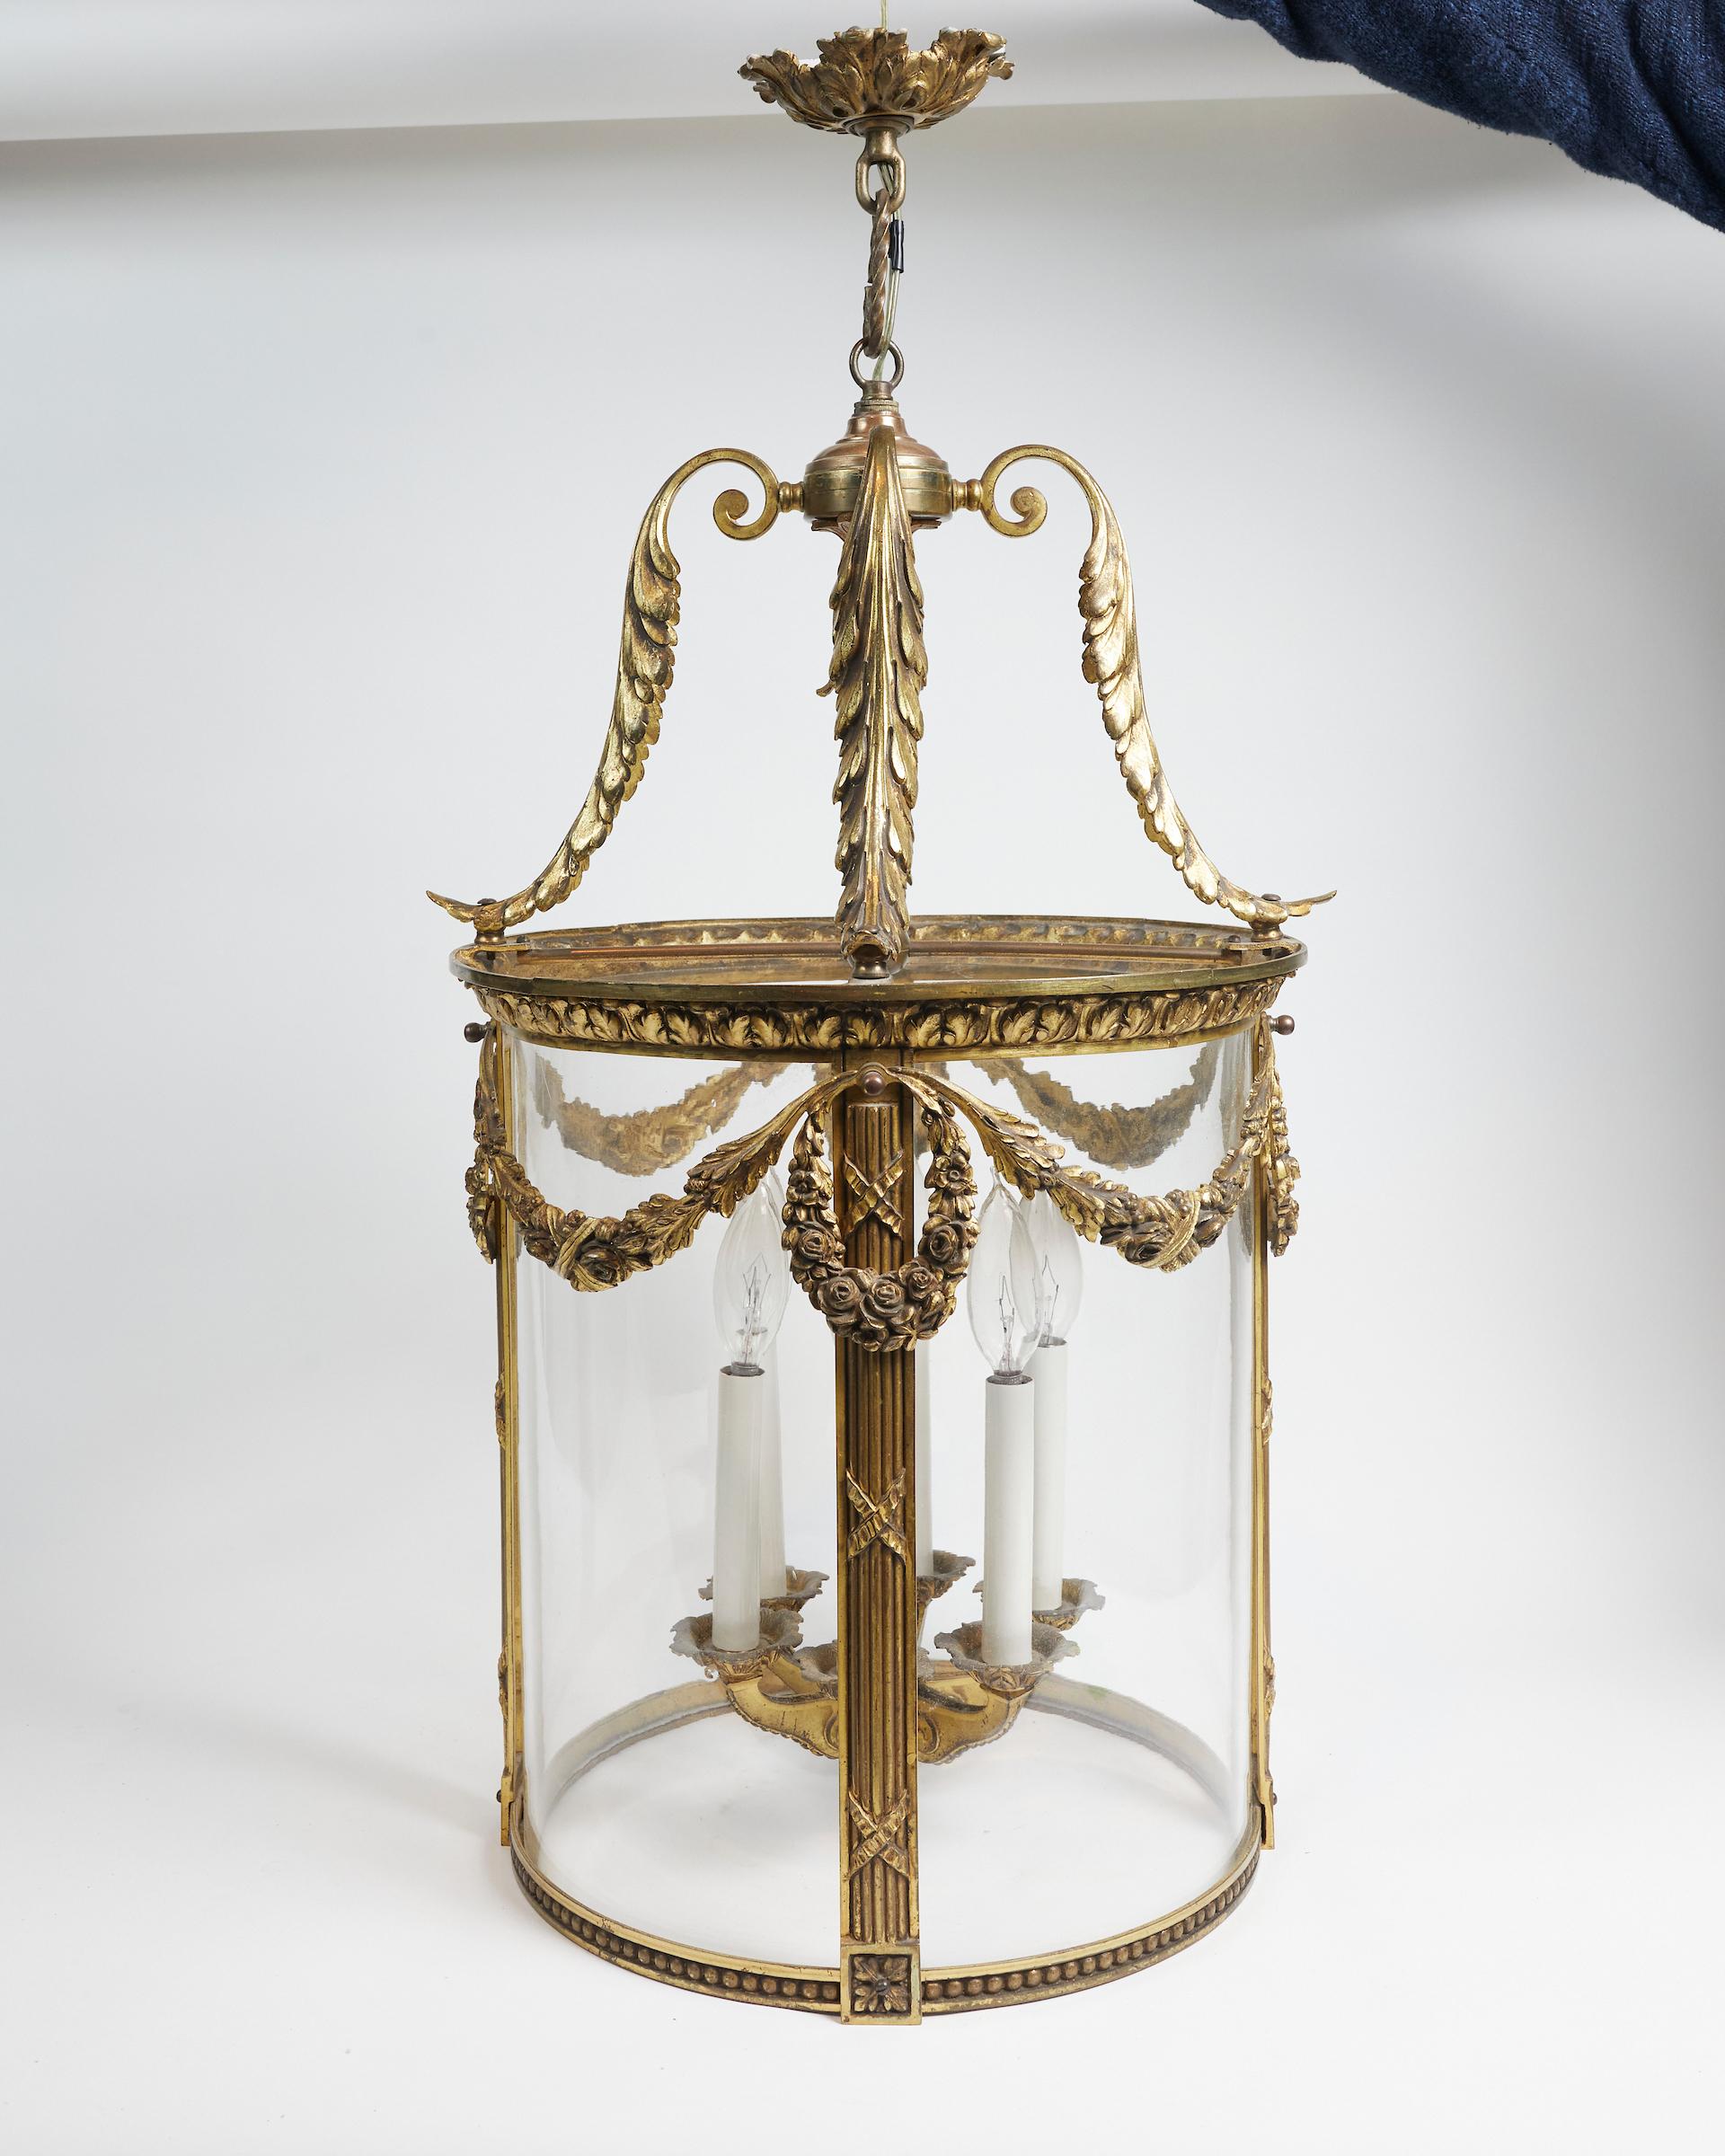 Beautiful French Louis XVI style cast and gilt bronze circular six lights lantern.
Beautiful original gilding and circular glass.